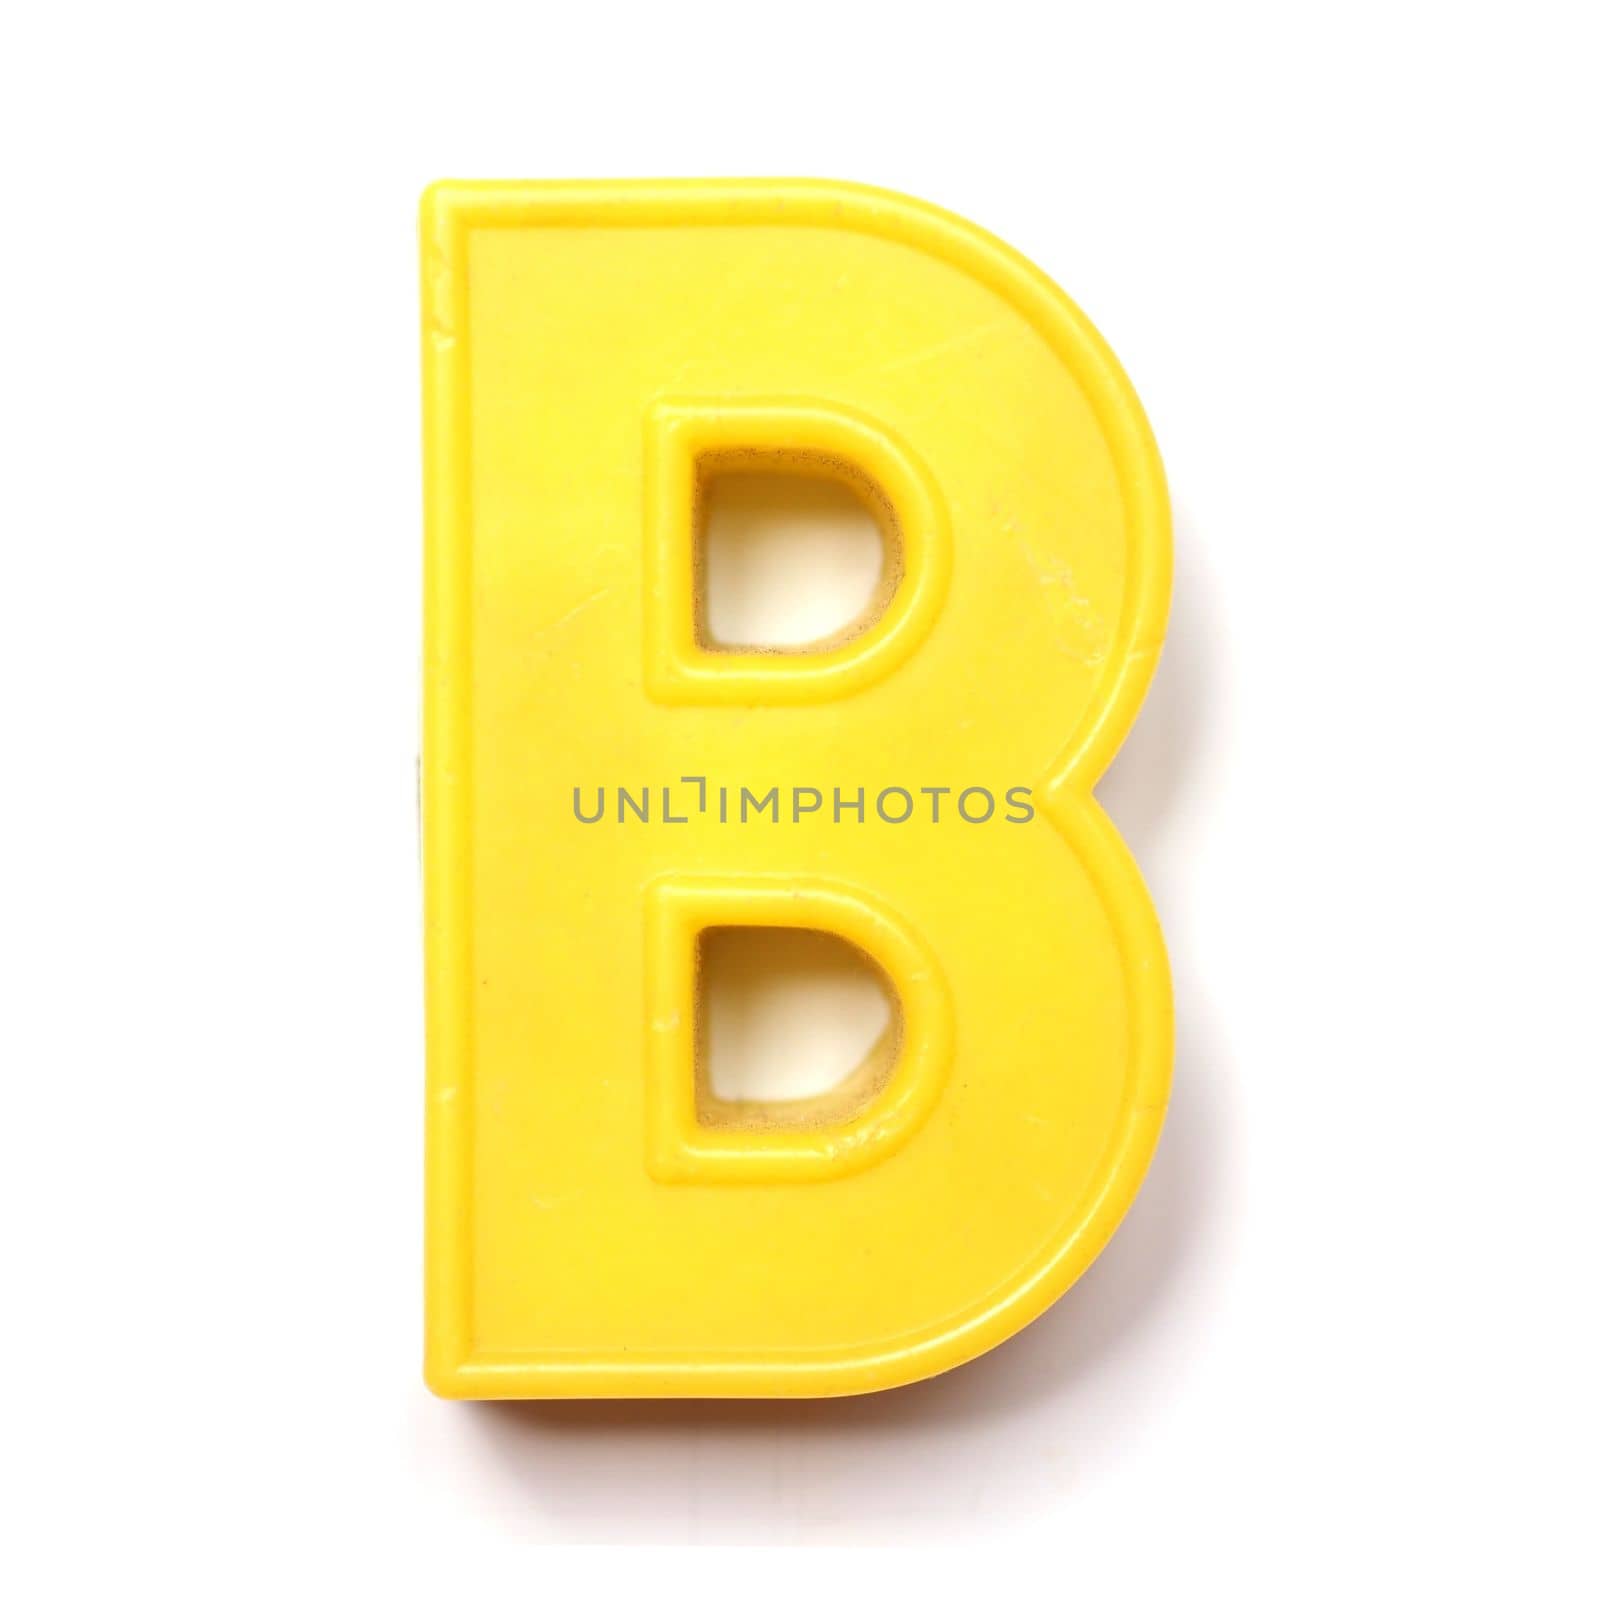 Magnetic uppercase letter B of the British alphabet